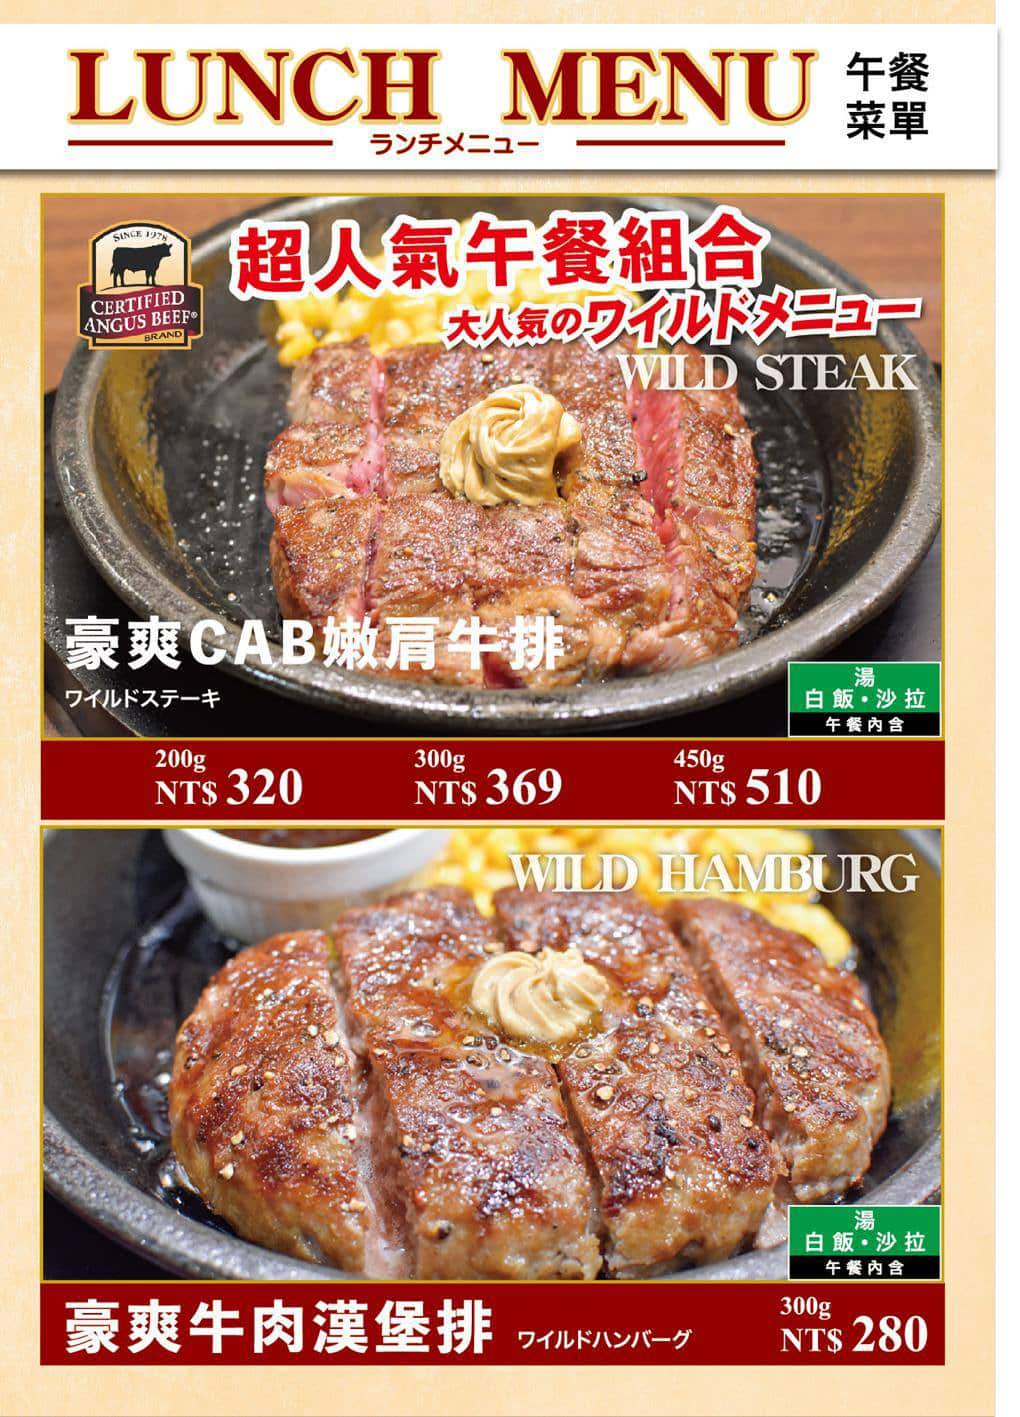 Ikinari Steak 菜單